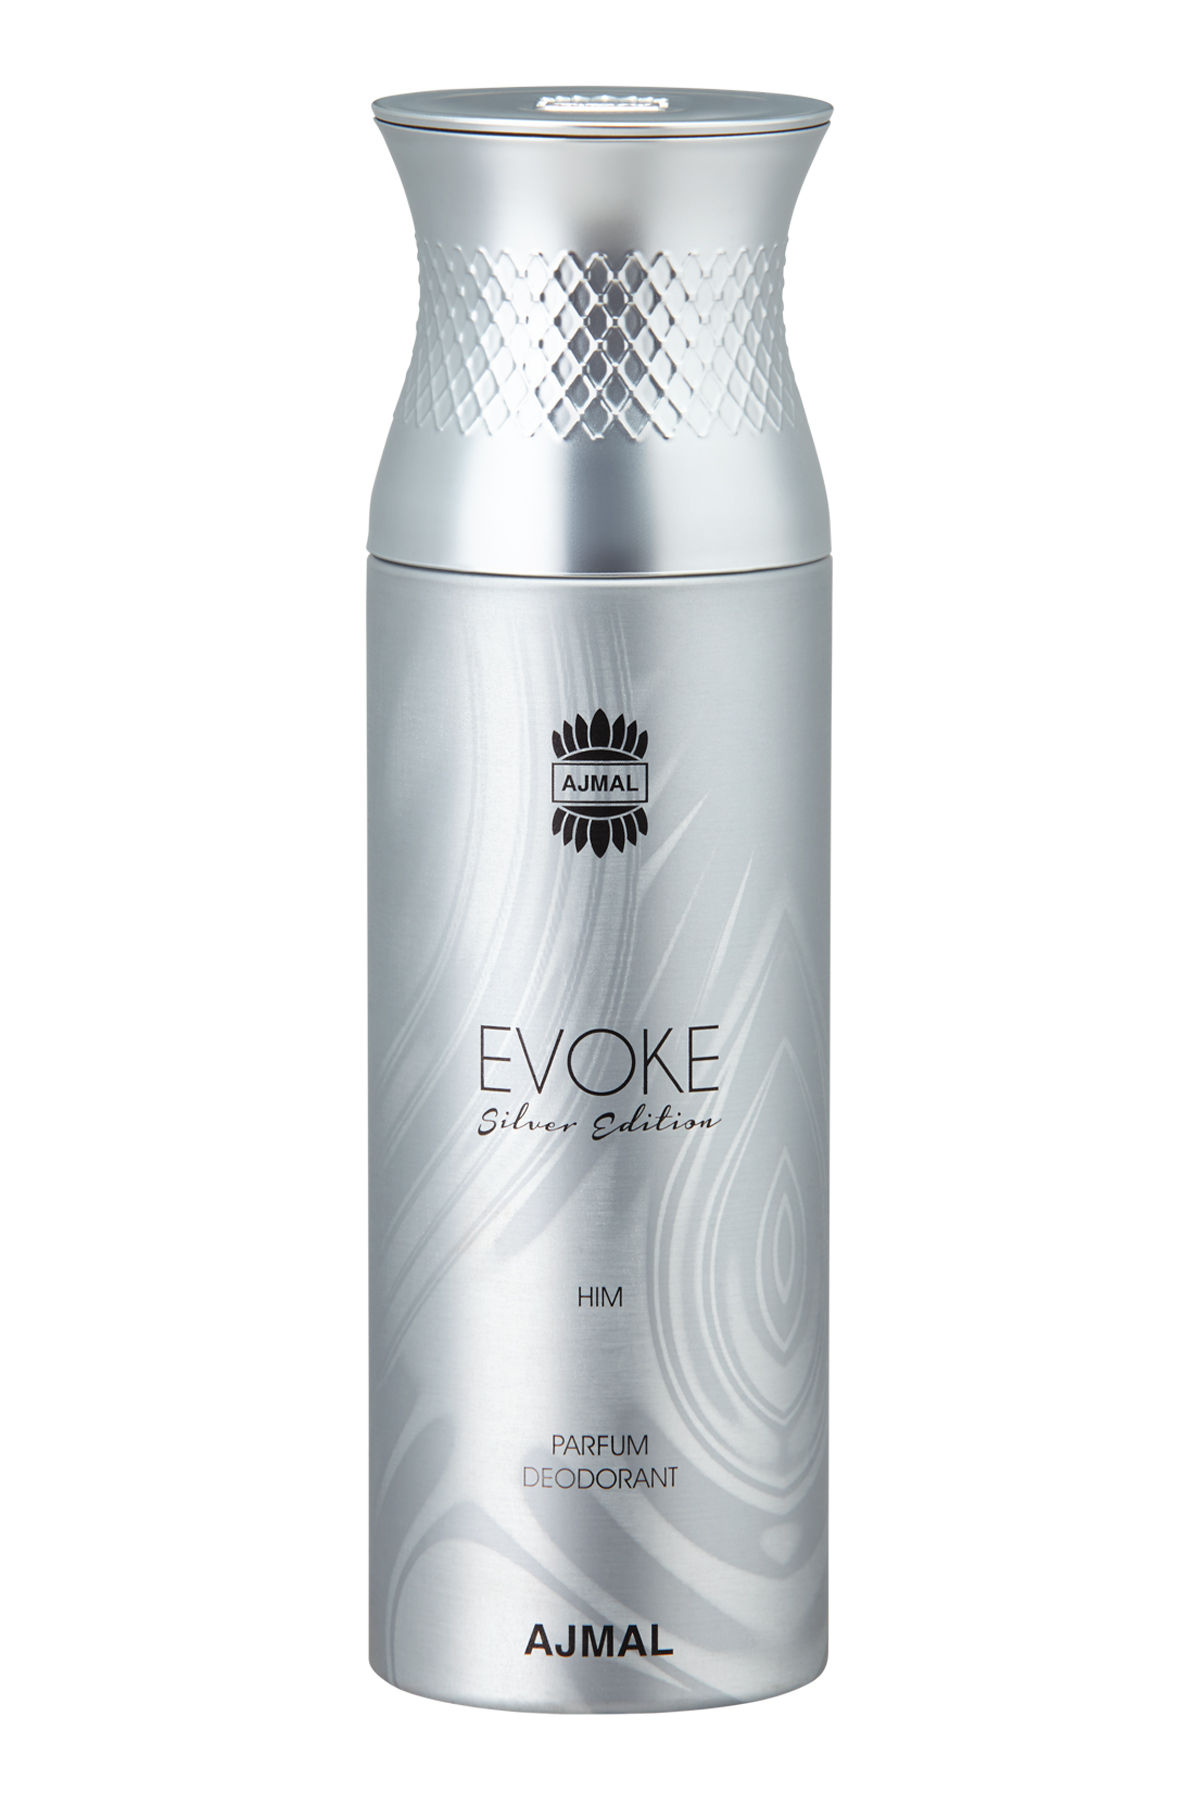 Ajmal Evoke Silver Edition Parfum Deodarant For Men